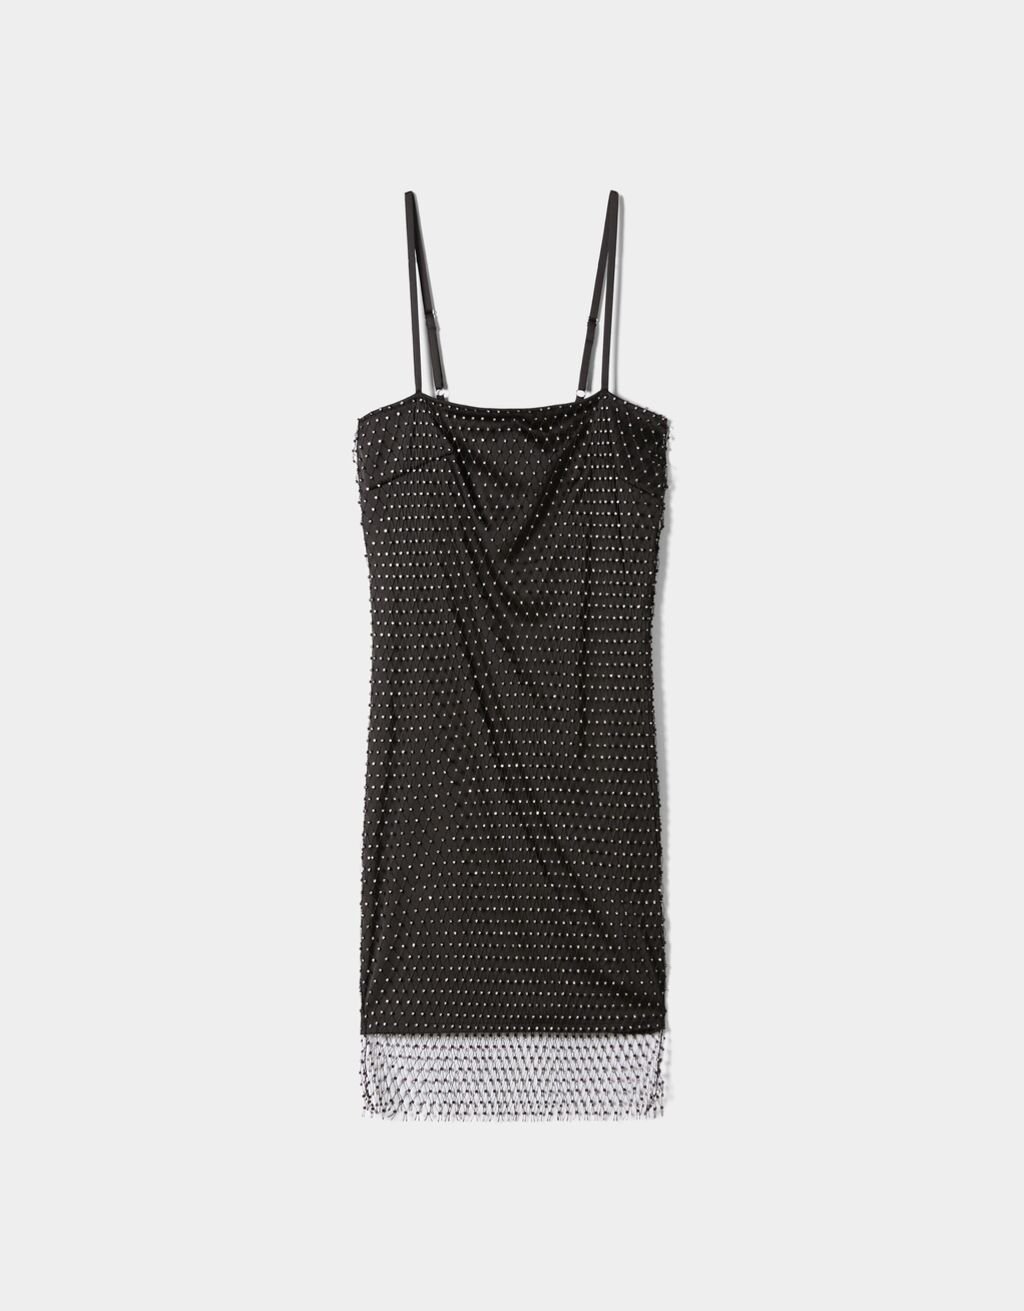 Mini strappy metallic mesh dress with strass.